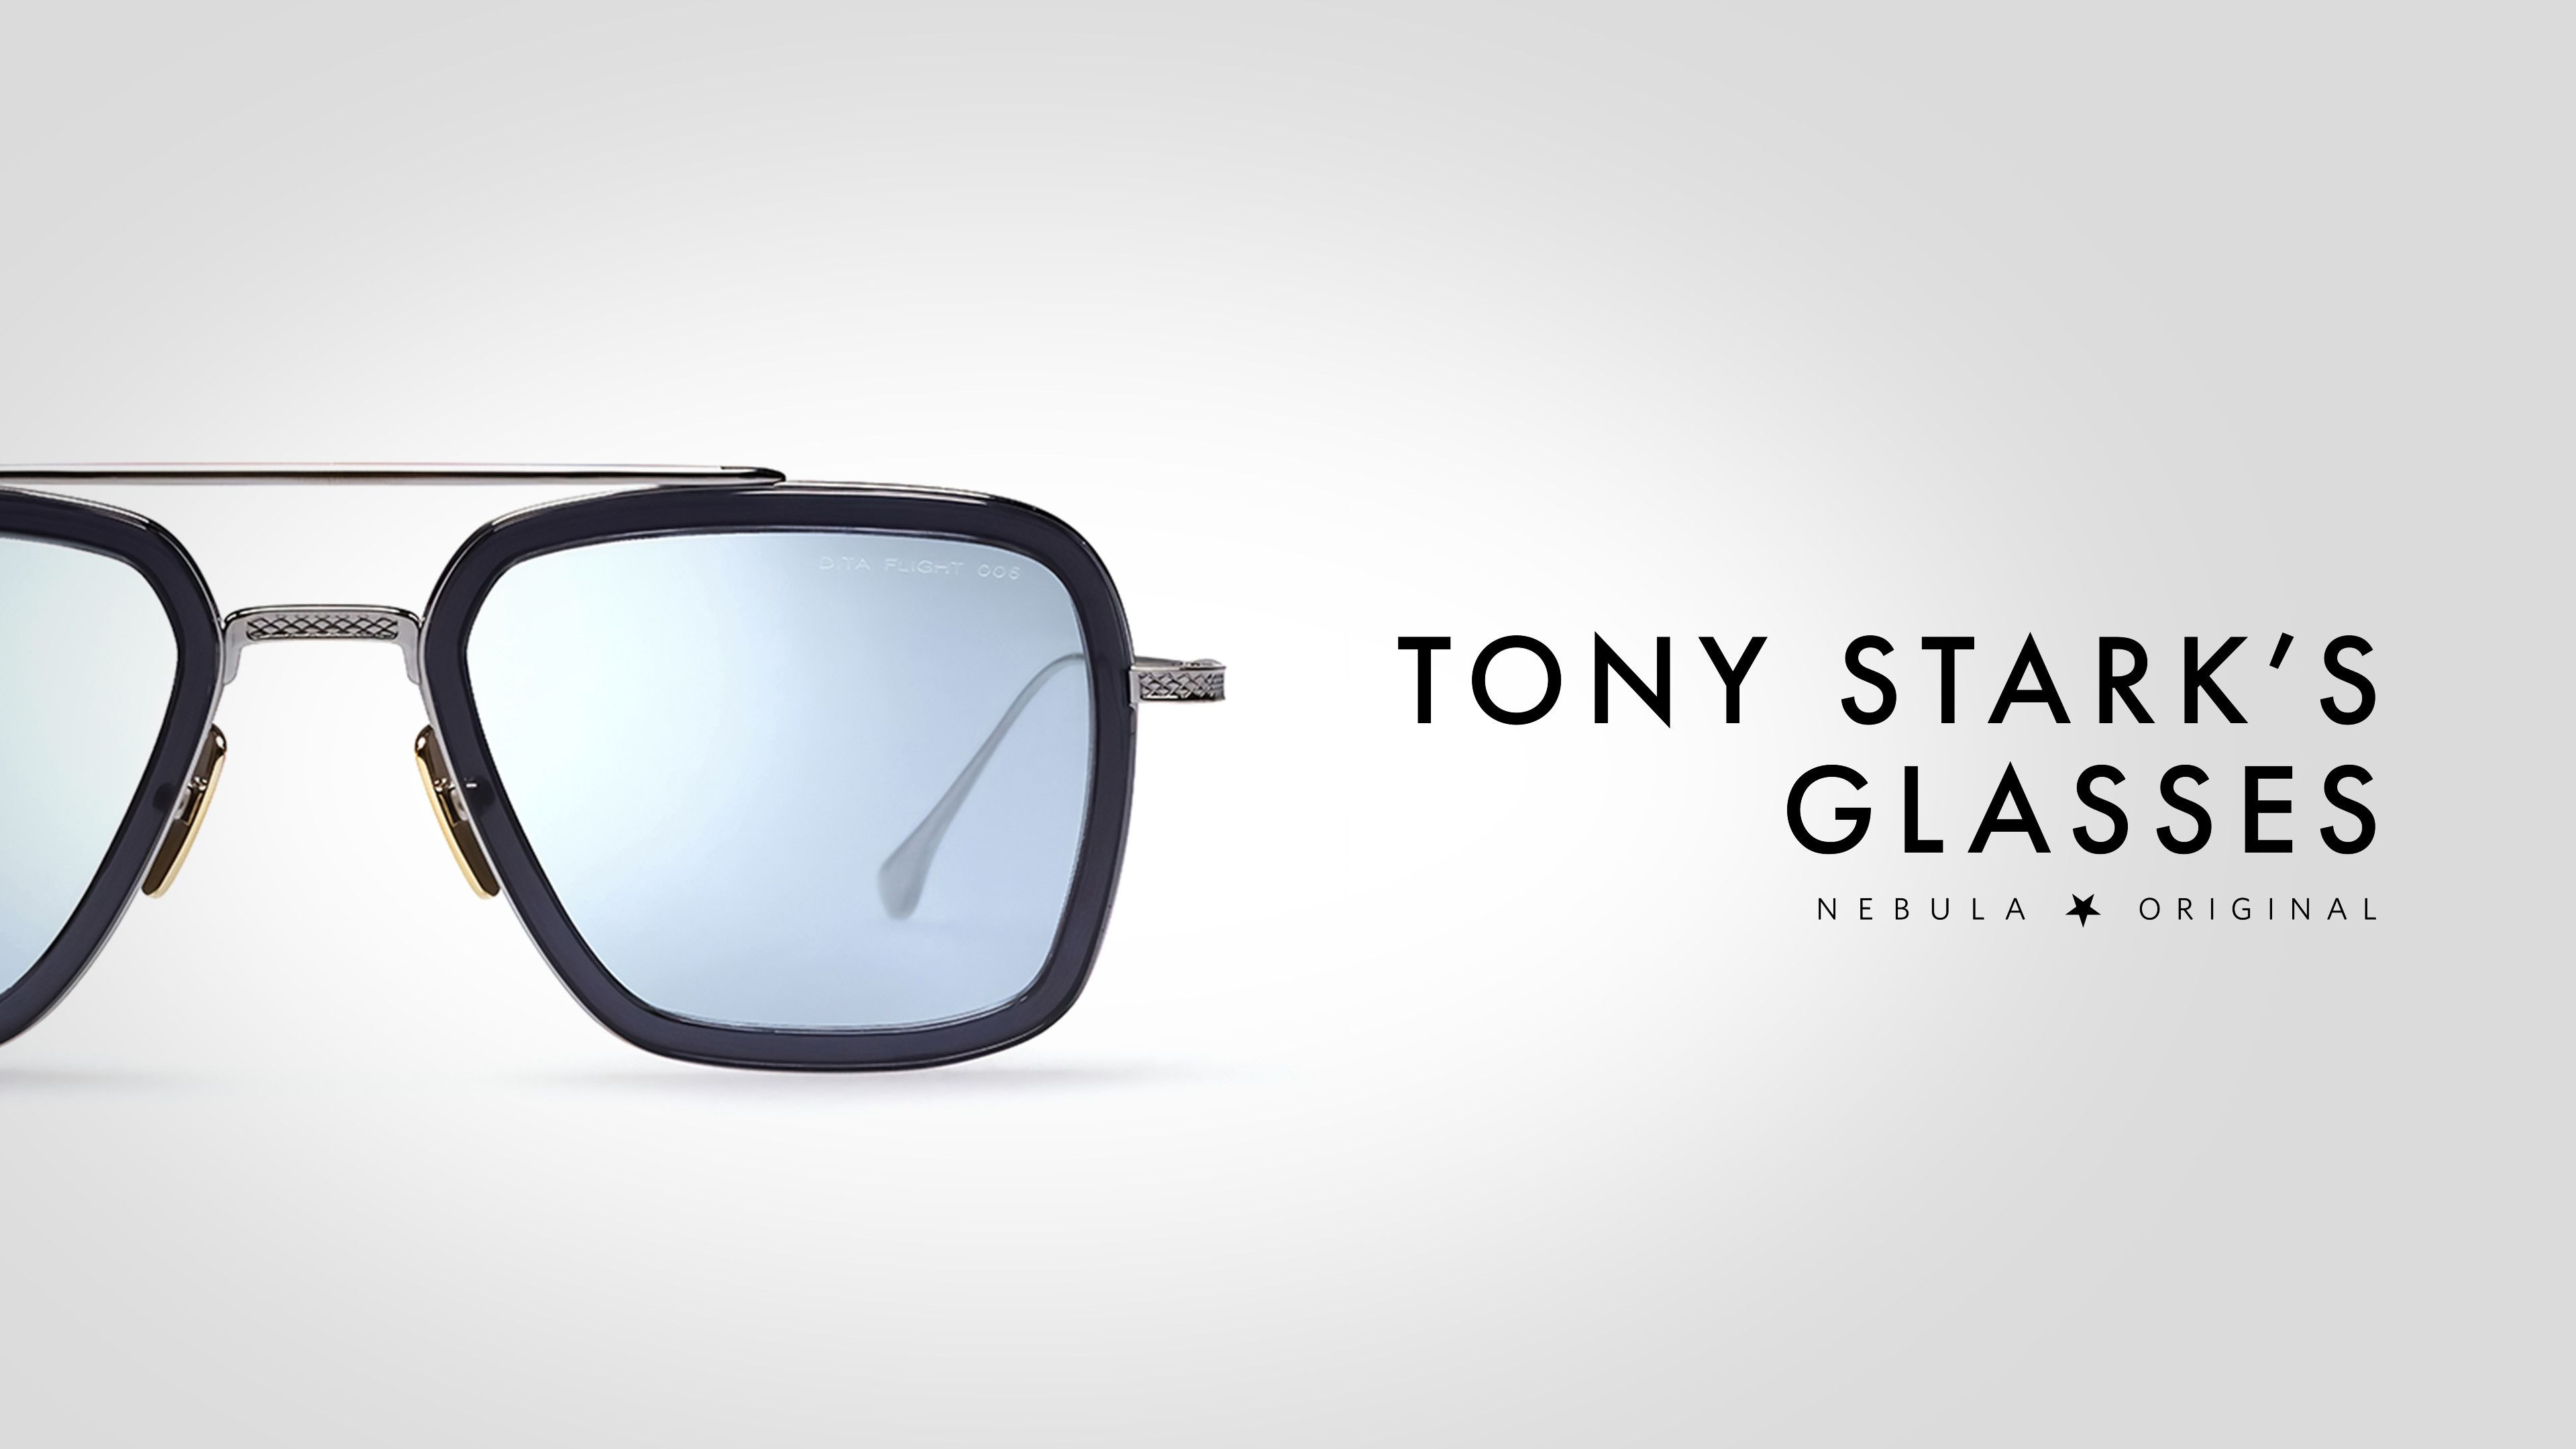 Tony Stark’s Glasses